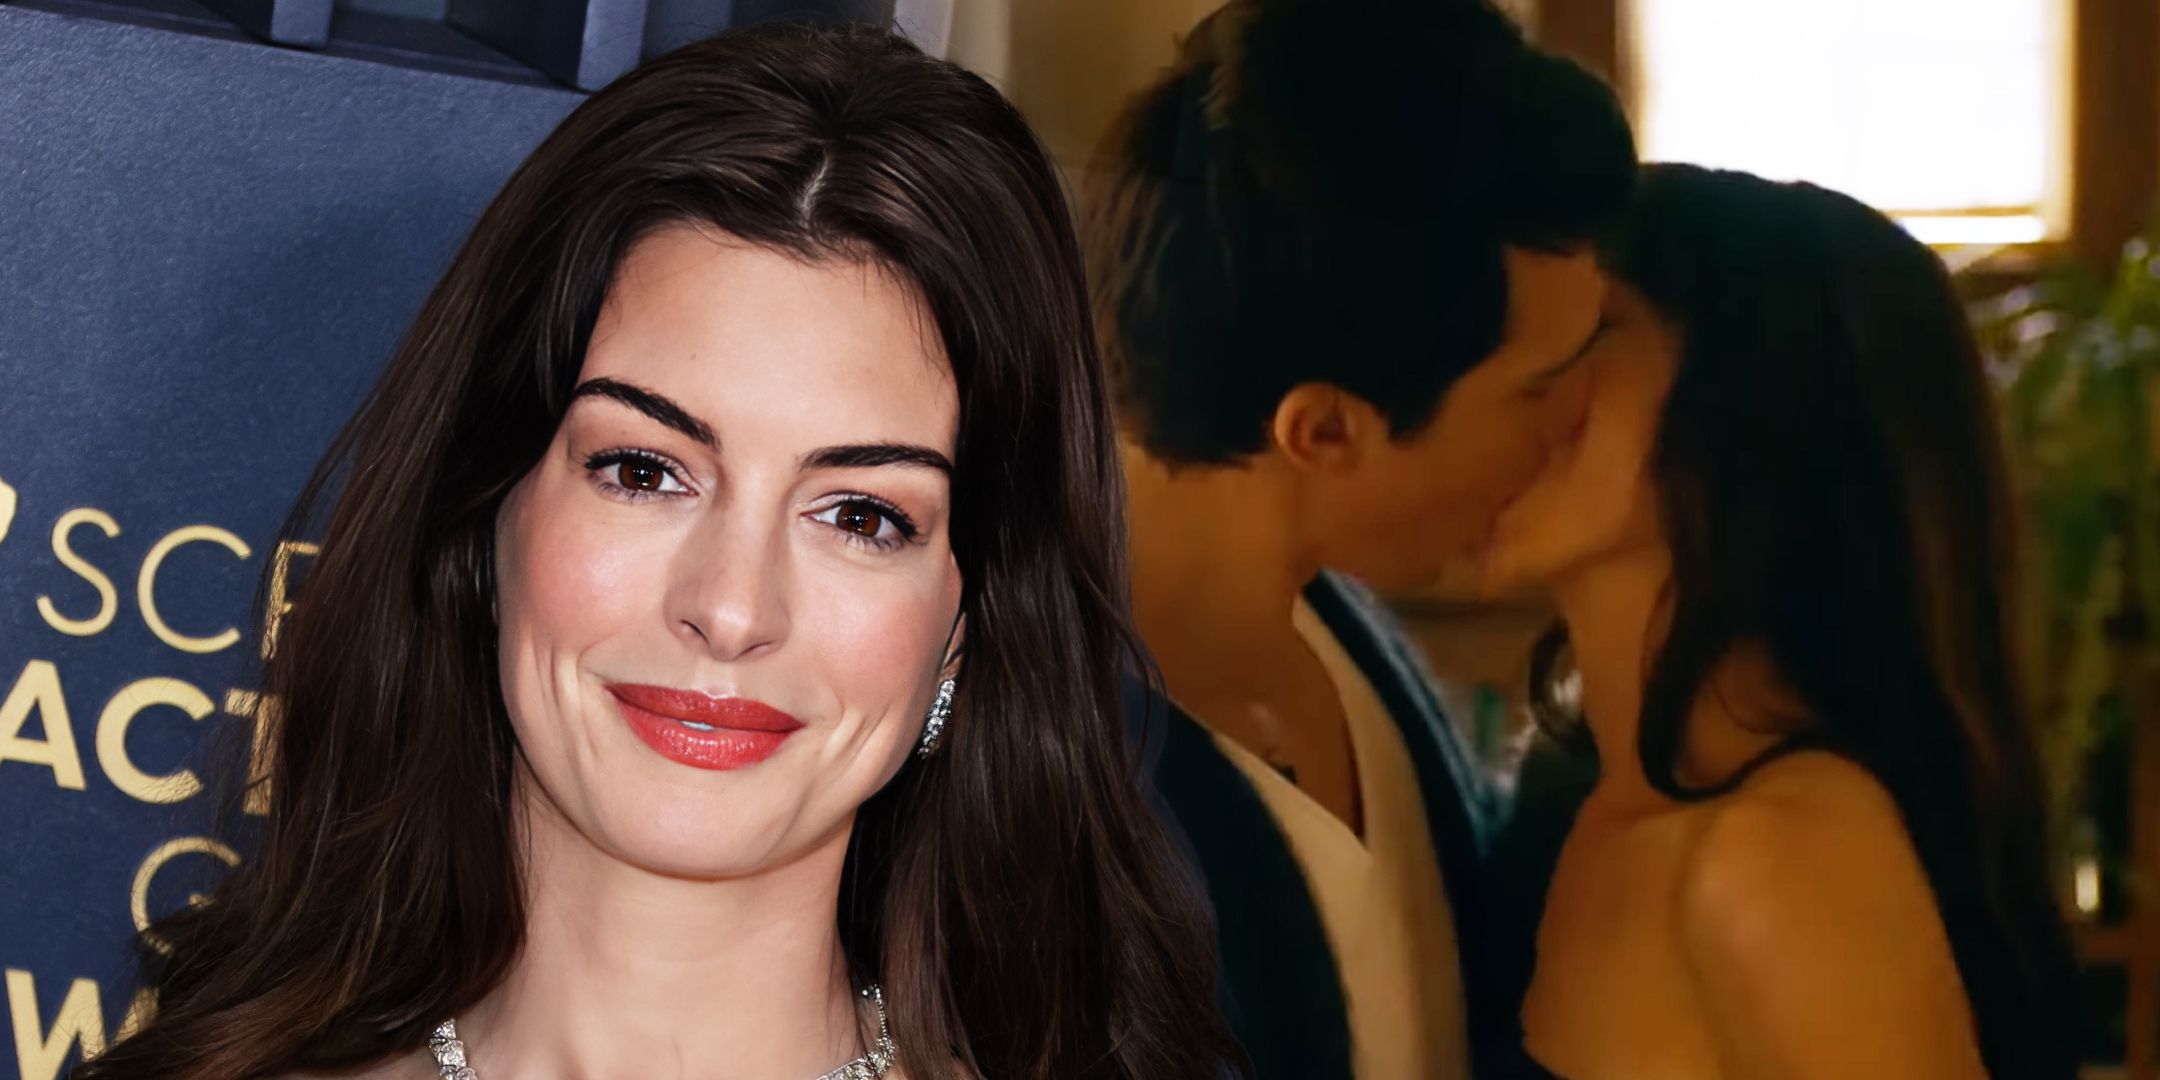 Anne Hathaway kissing scenes in movies 